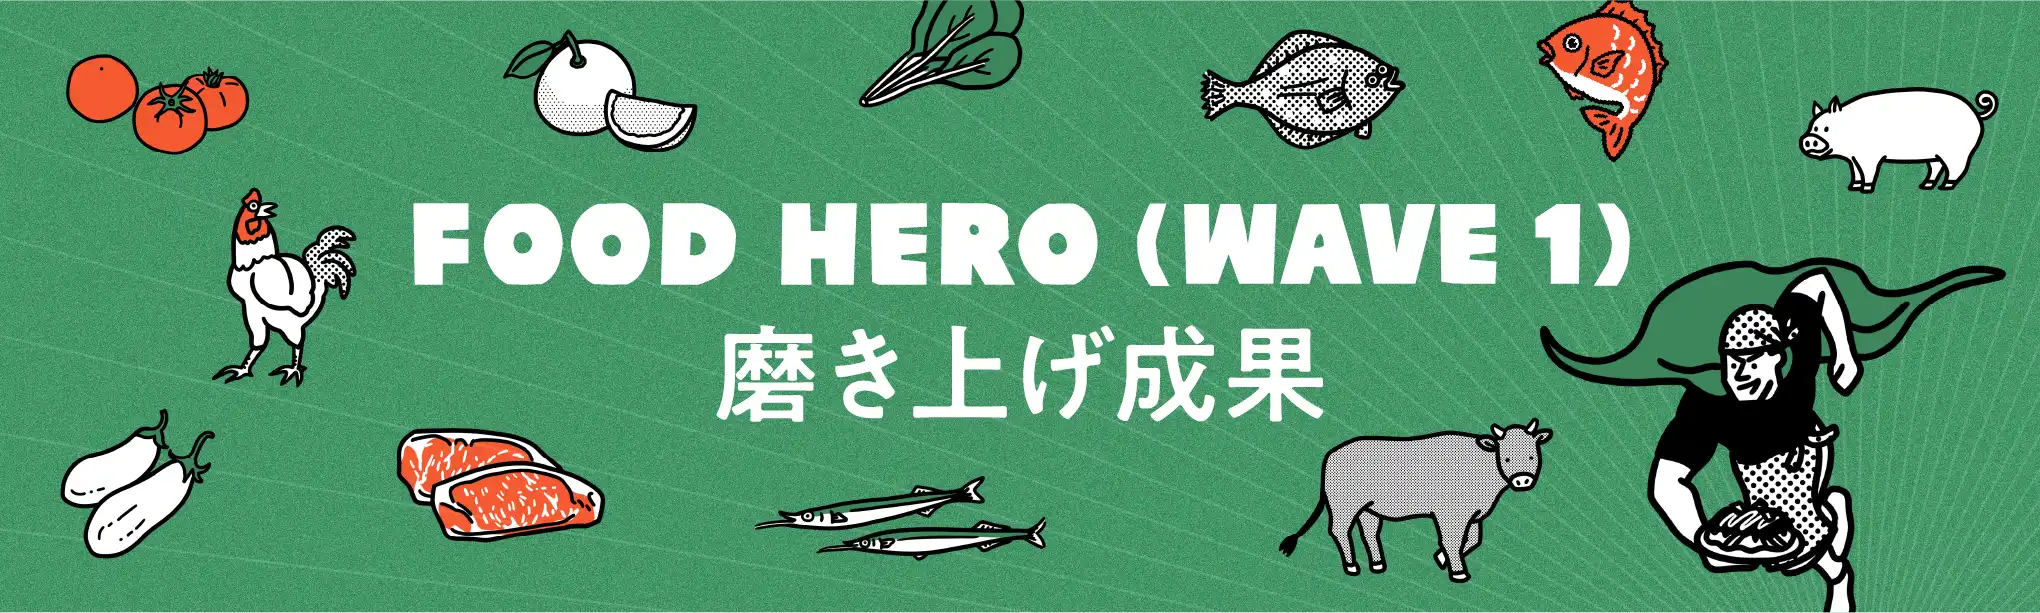 FOOD HERO(WAVE 1)磨き上げ成果